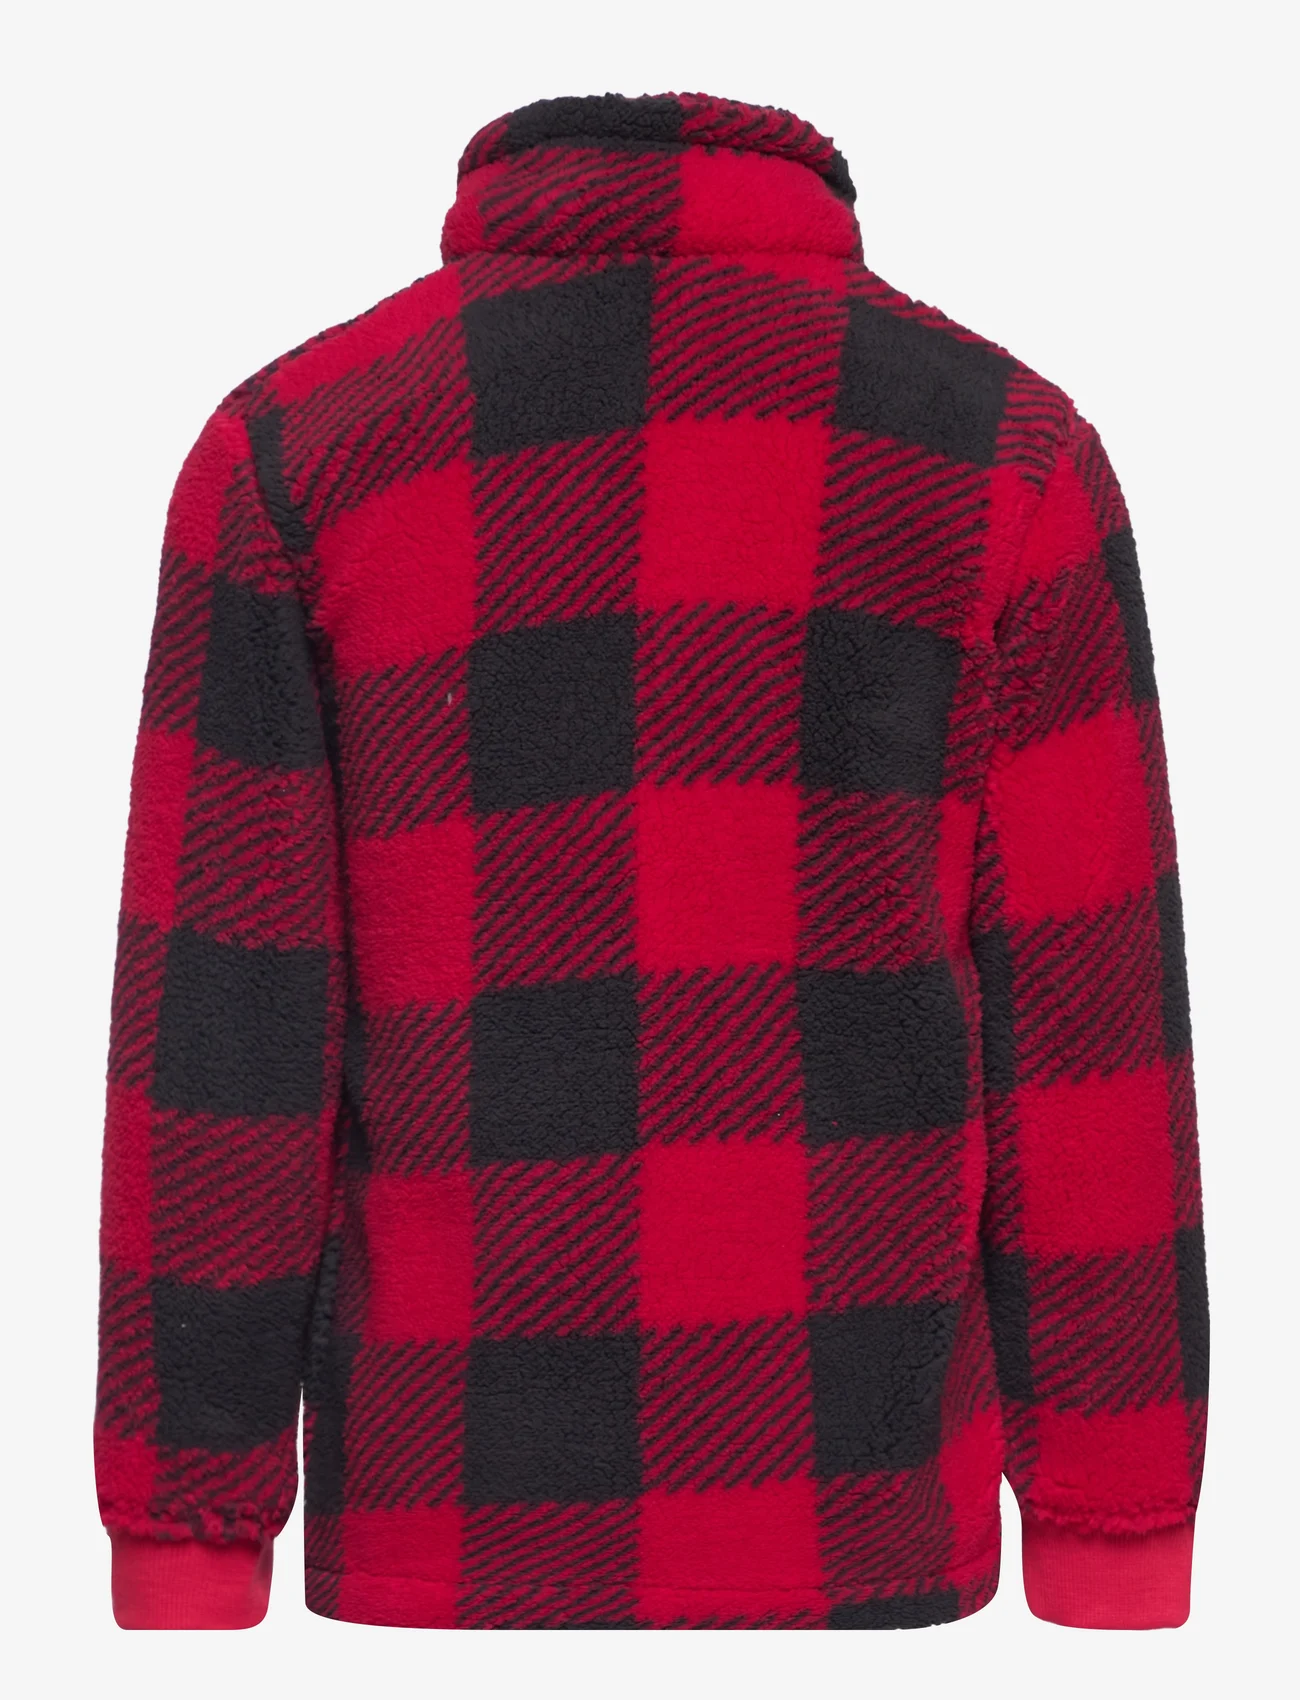 Columbia Sportswear - Rugged Ridge II Sherpa Full Zip - isolierte jacken - mountain red check - 1